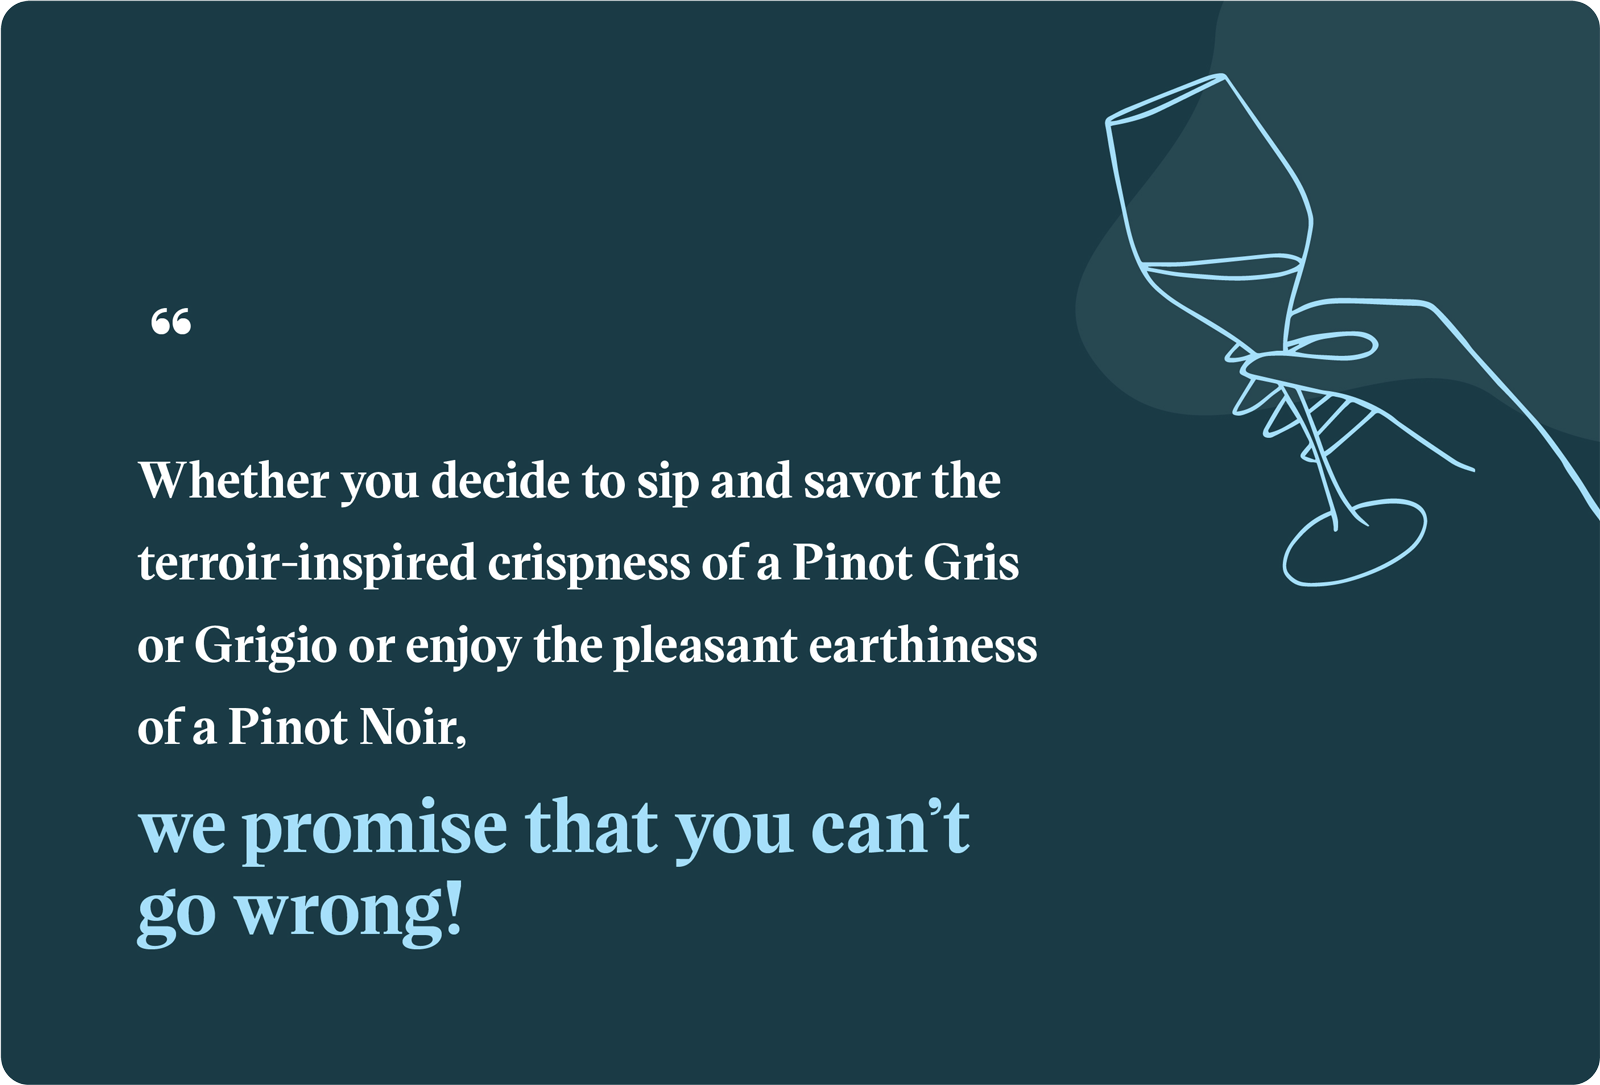 Dueling Pinots: Grigio vs Gris vs Noit